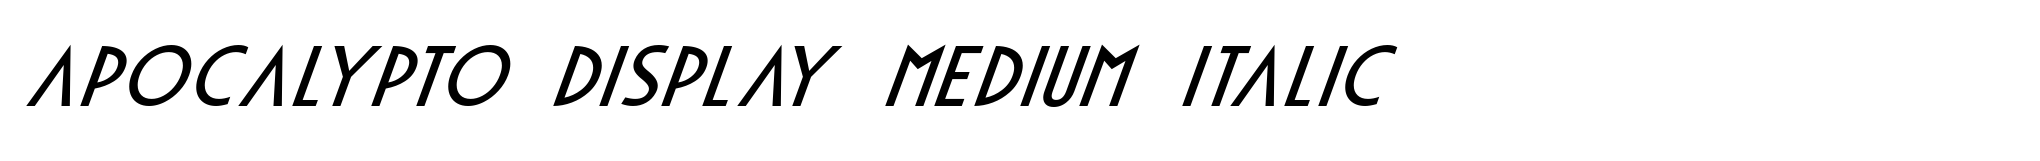 Apocalypto Display Medium Italic image